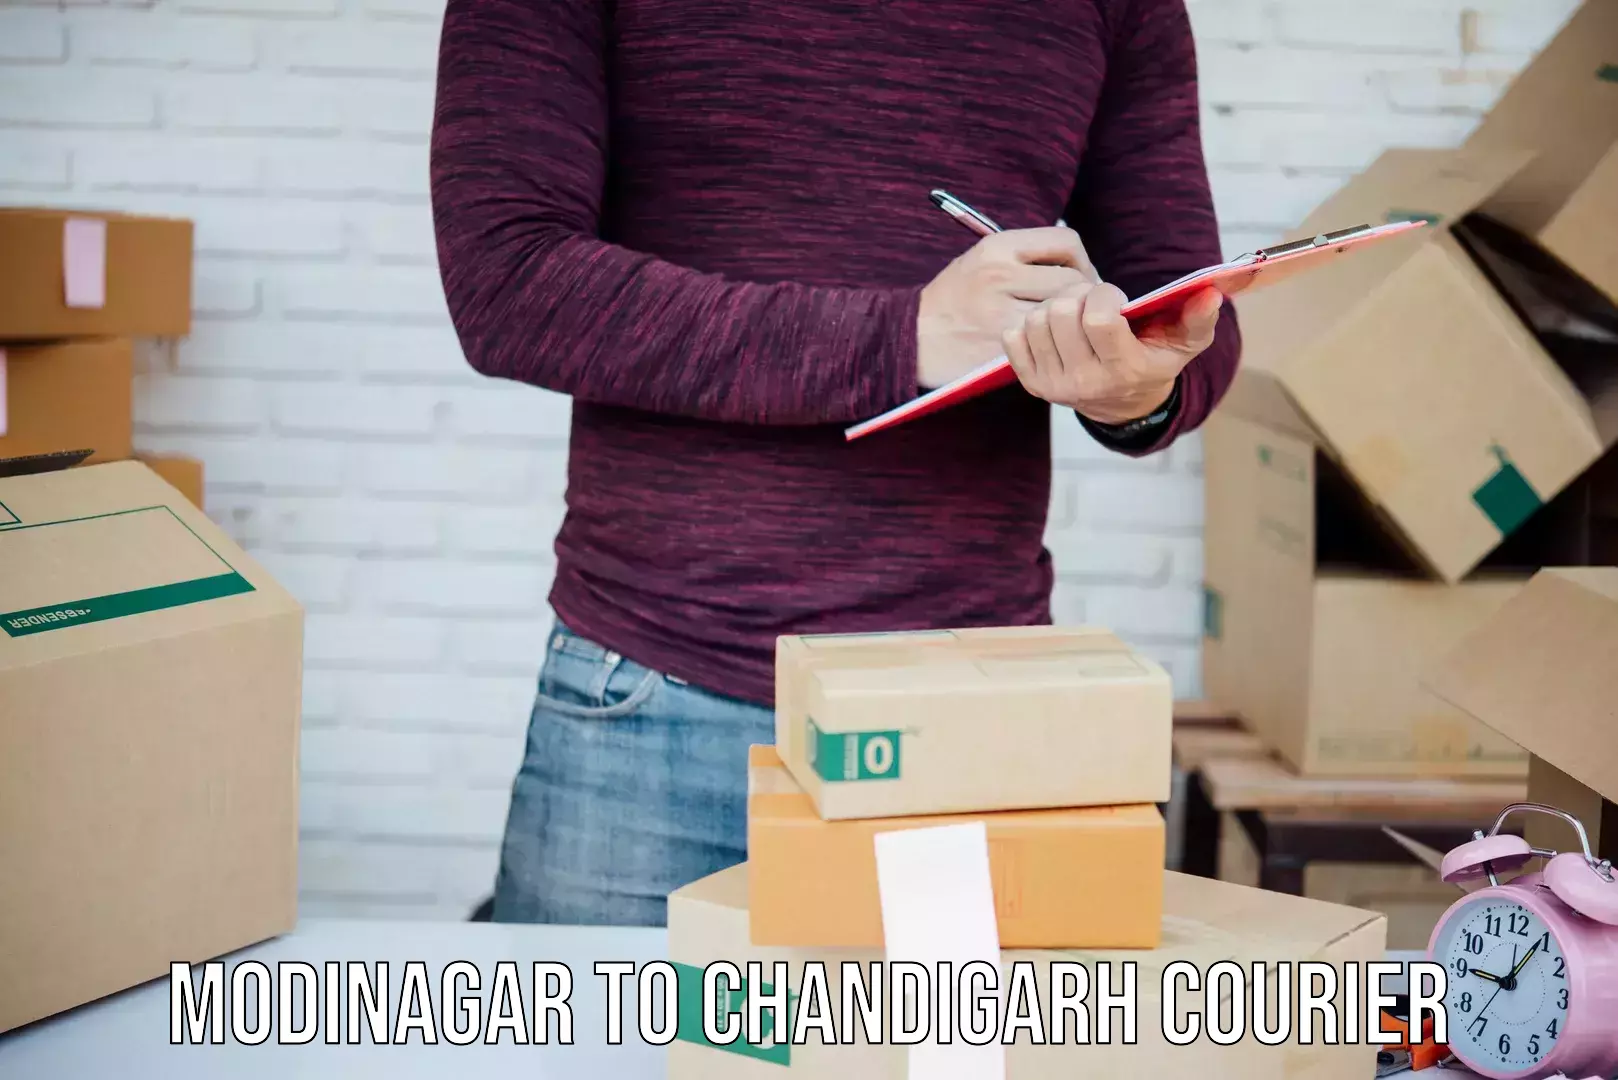 Courier service comparison Modinagar to Chandigarh